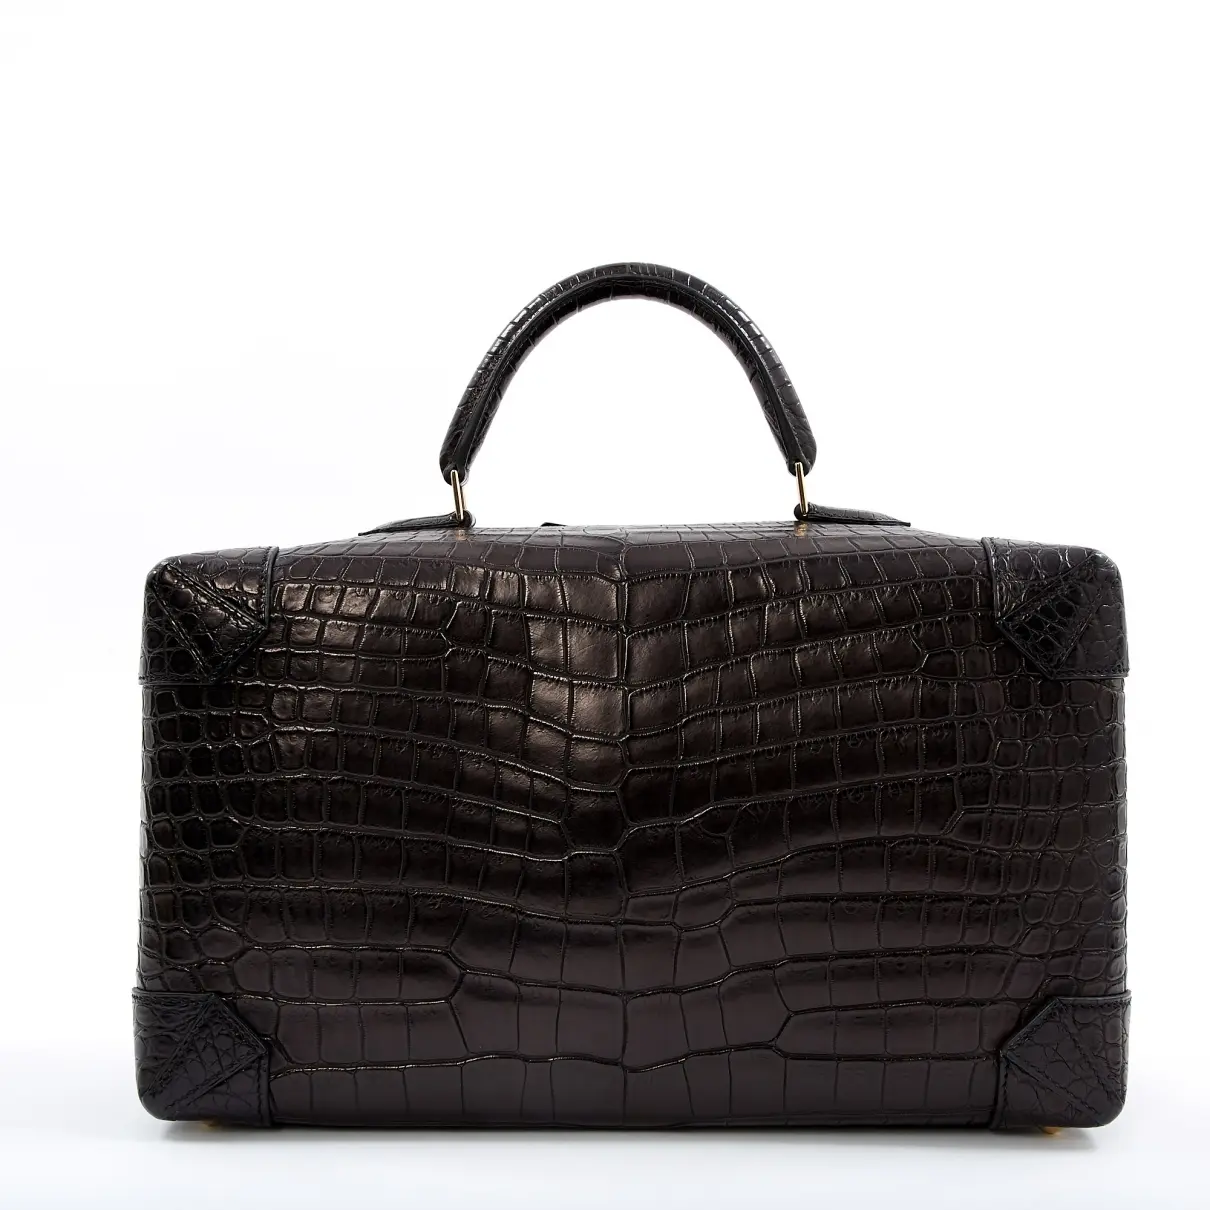 Buy Hermès Crocodile handbag online